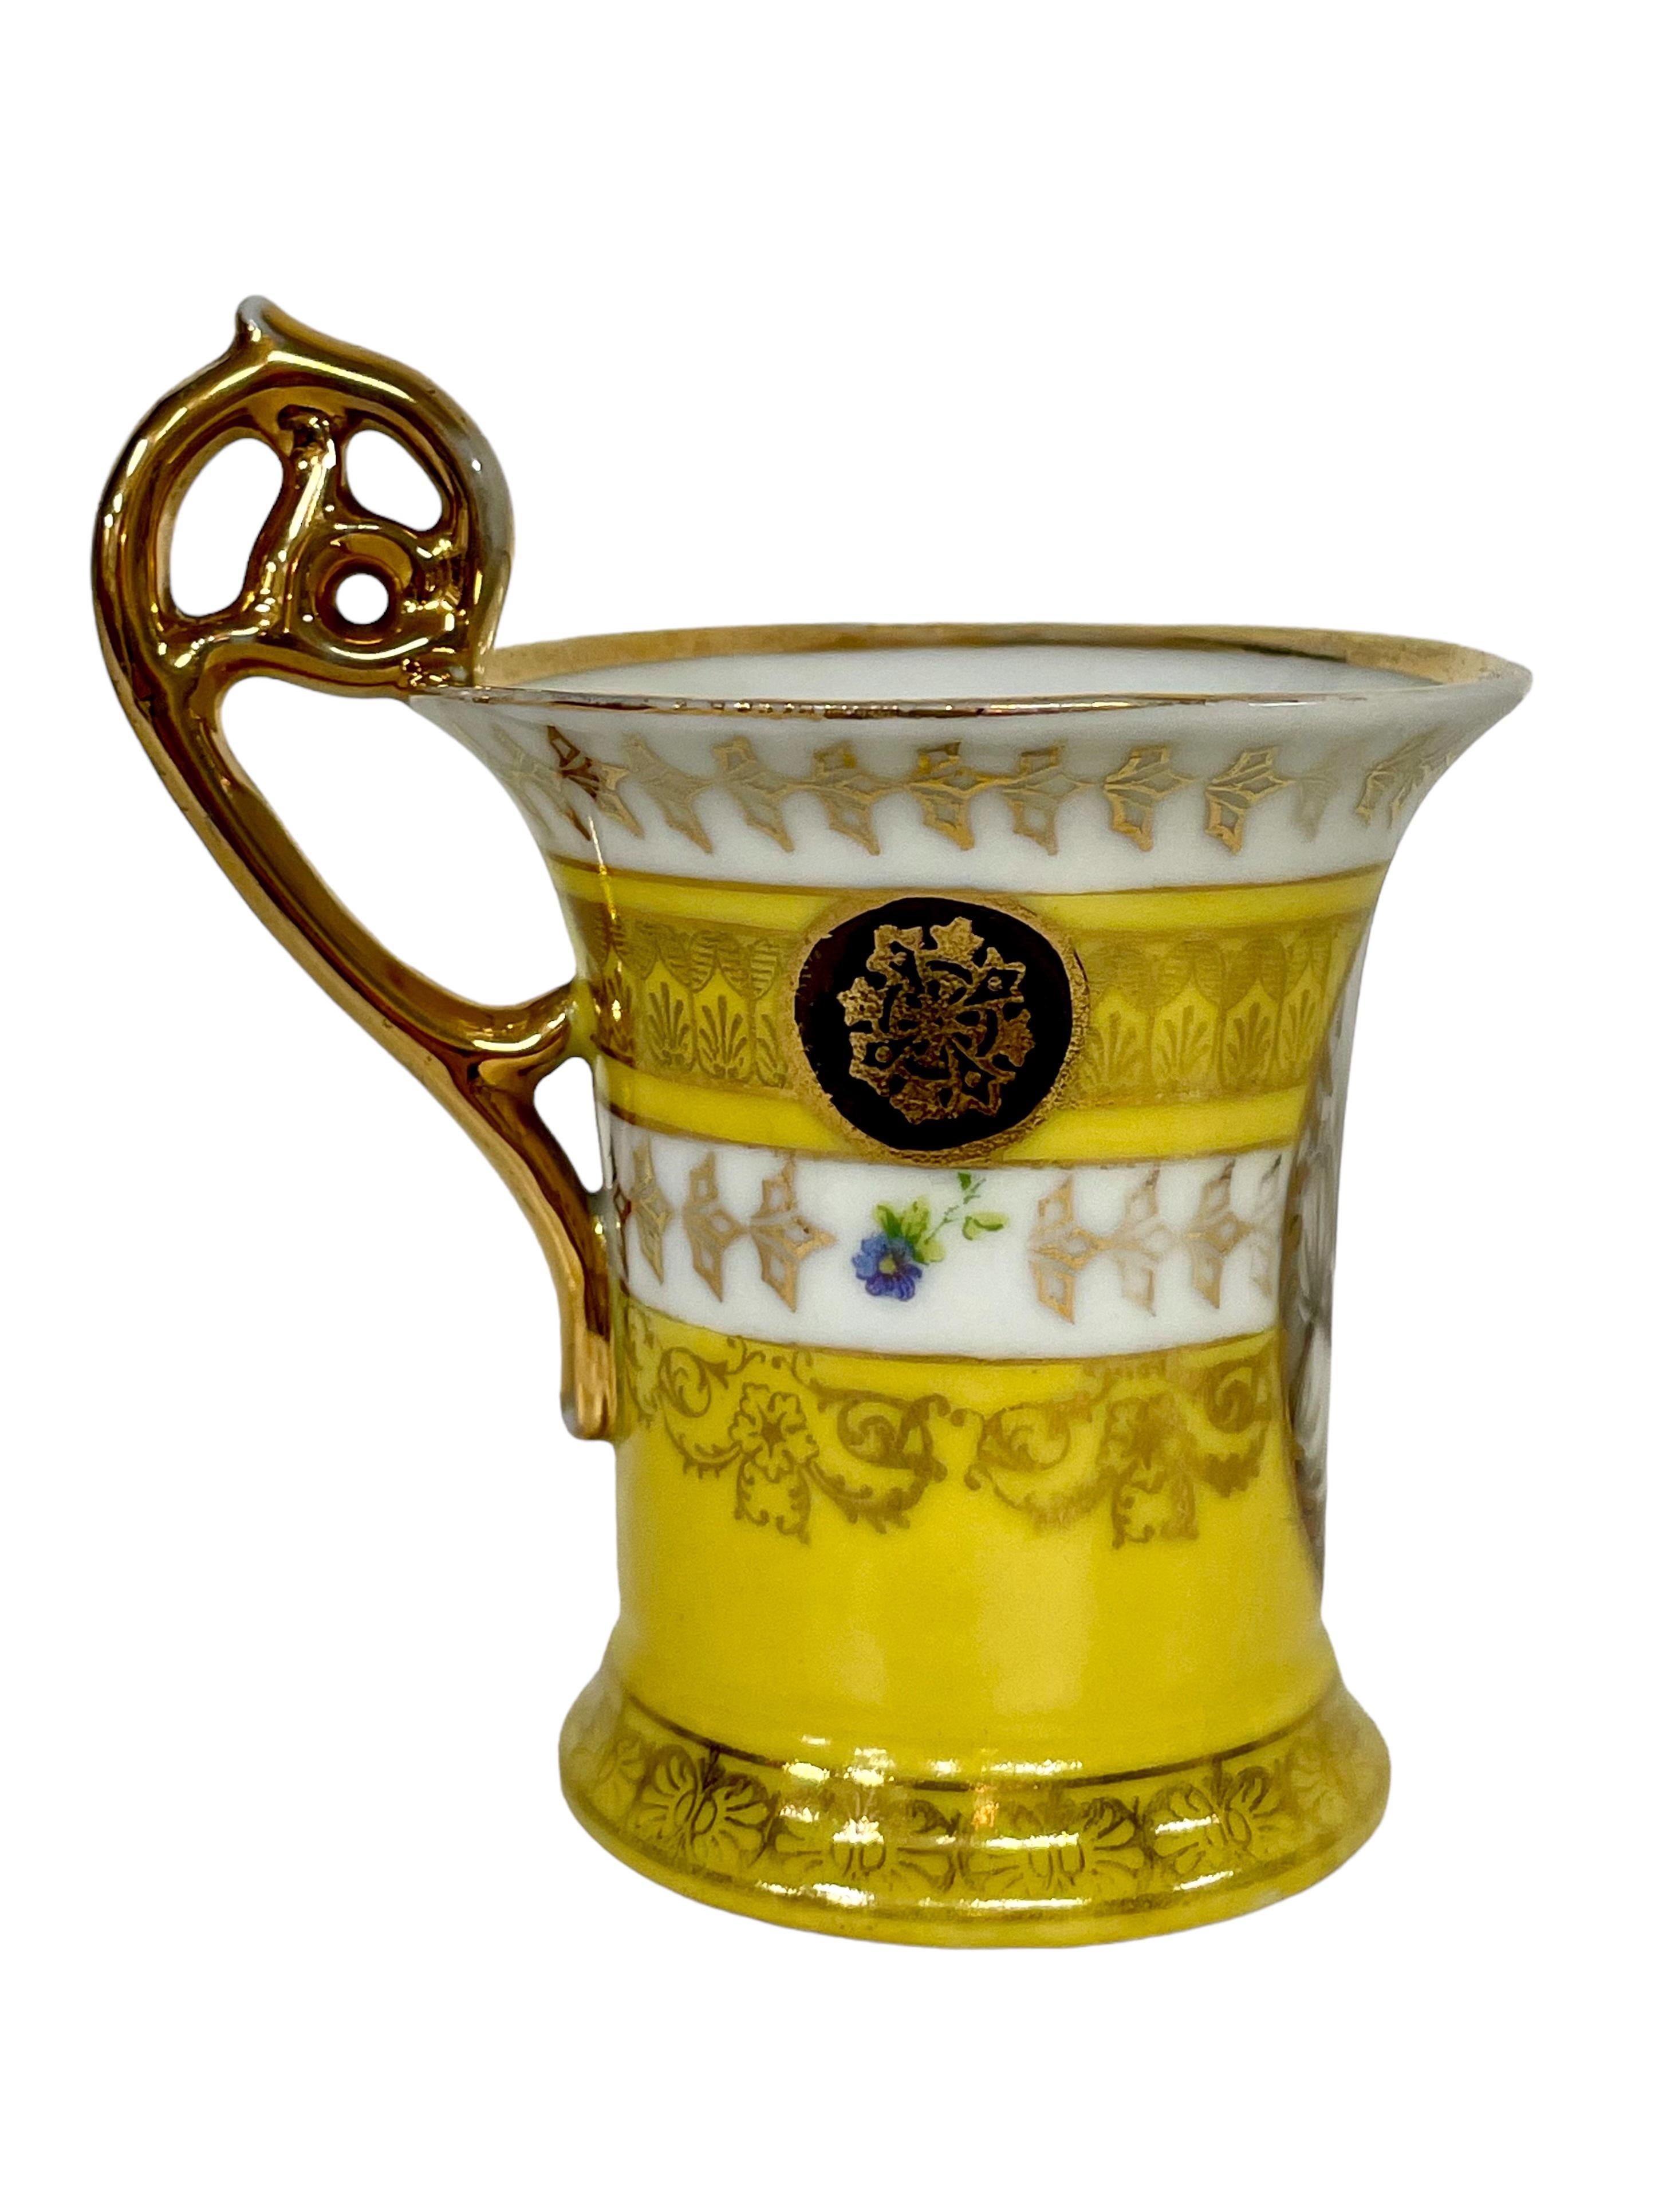 Gilt Paris Porcelain Teacup and Saucer Depicting Empress Josephine For Sale